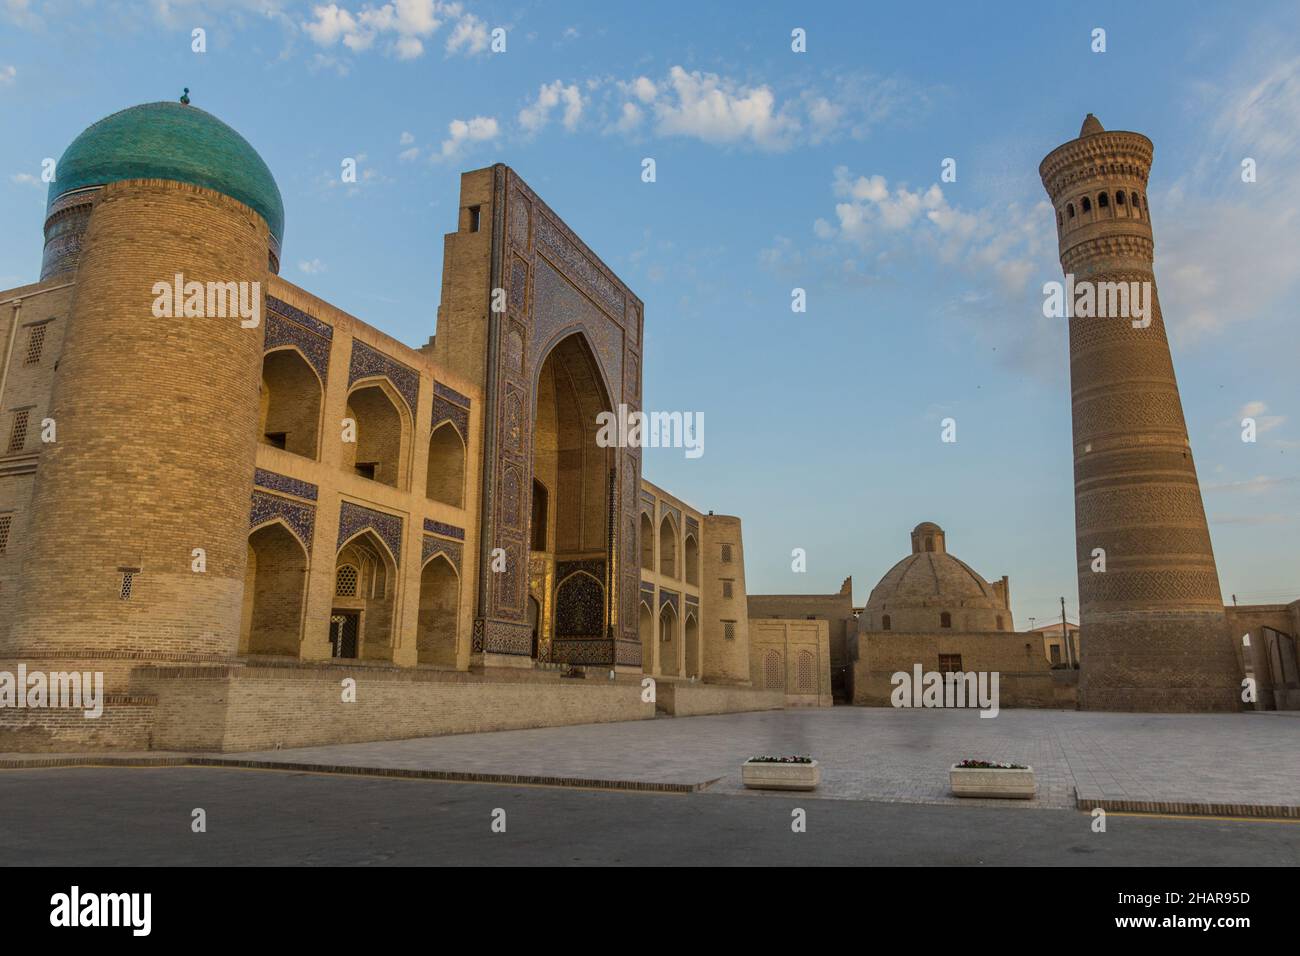 BUKHARA, UZBEKISTAN - APRIL 30, 2018: Mir-i-Arab Madrasa and Kalan minaret in Bukhara, Uzbekistan Stock Photo